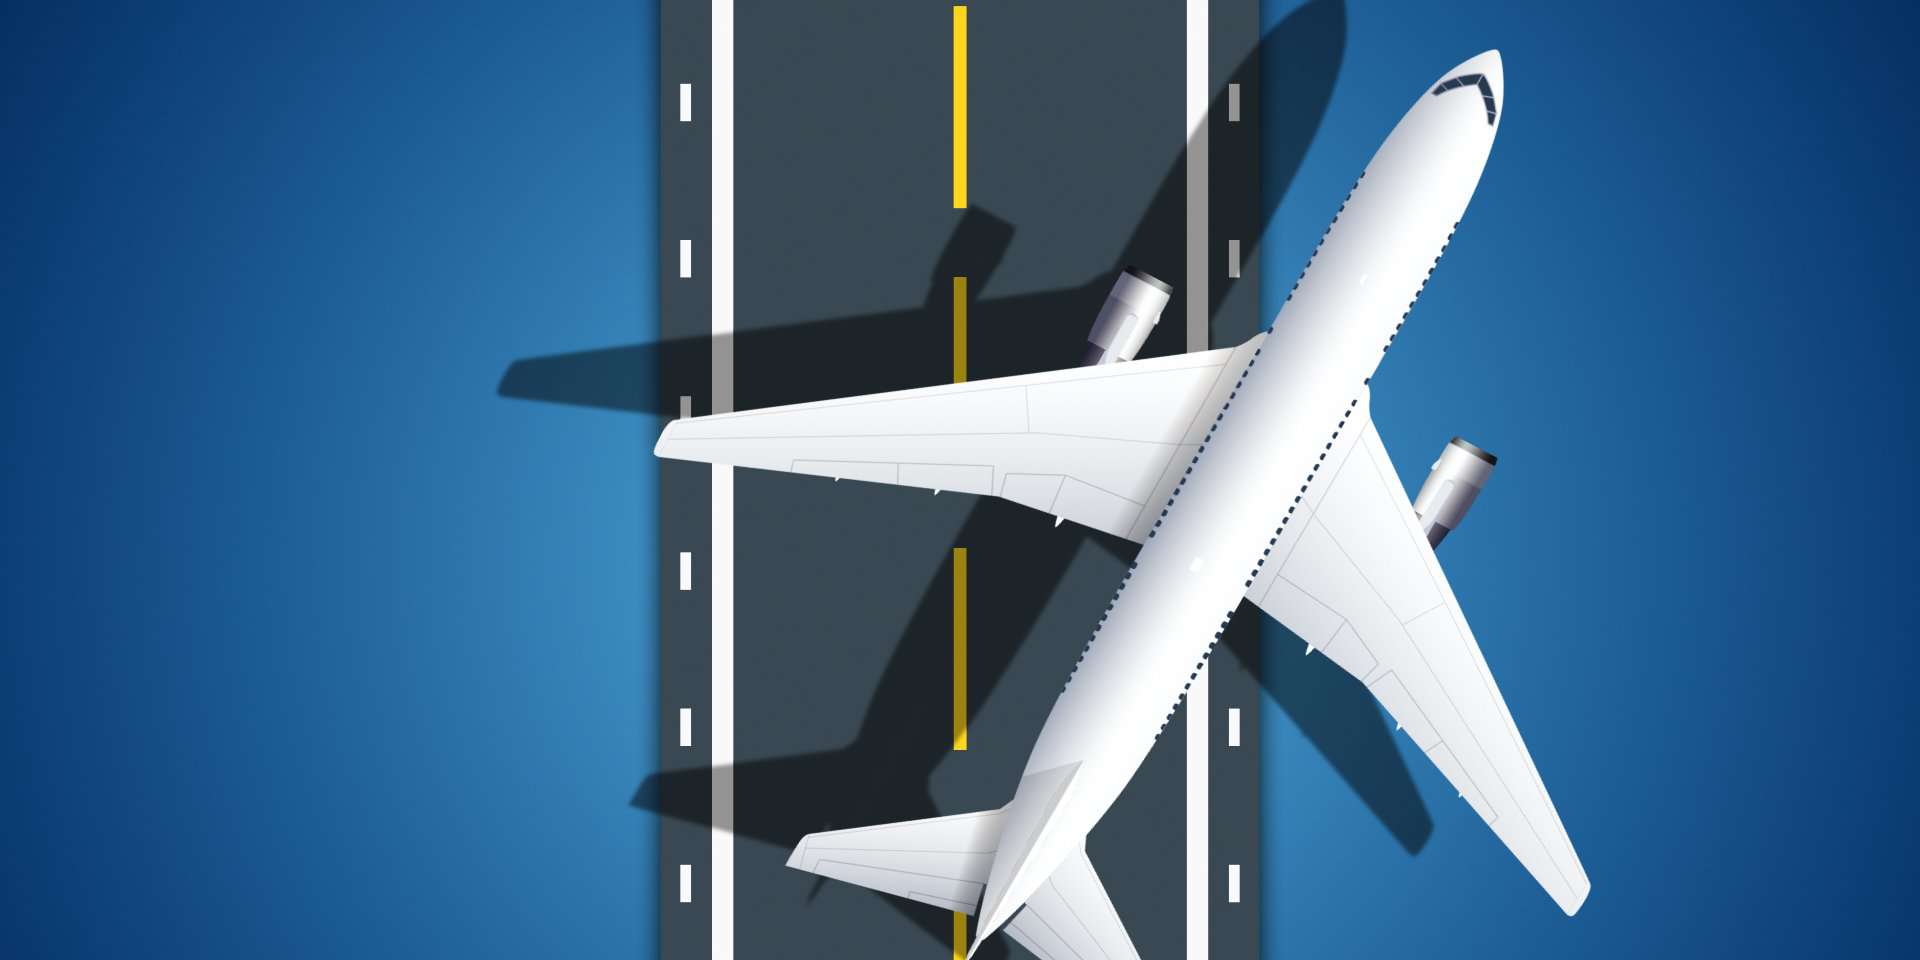 Taboola Ad Example 66844 - Watch How Planes Sideways Land In High Crosswinds